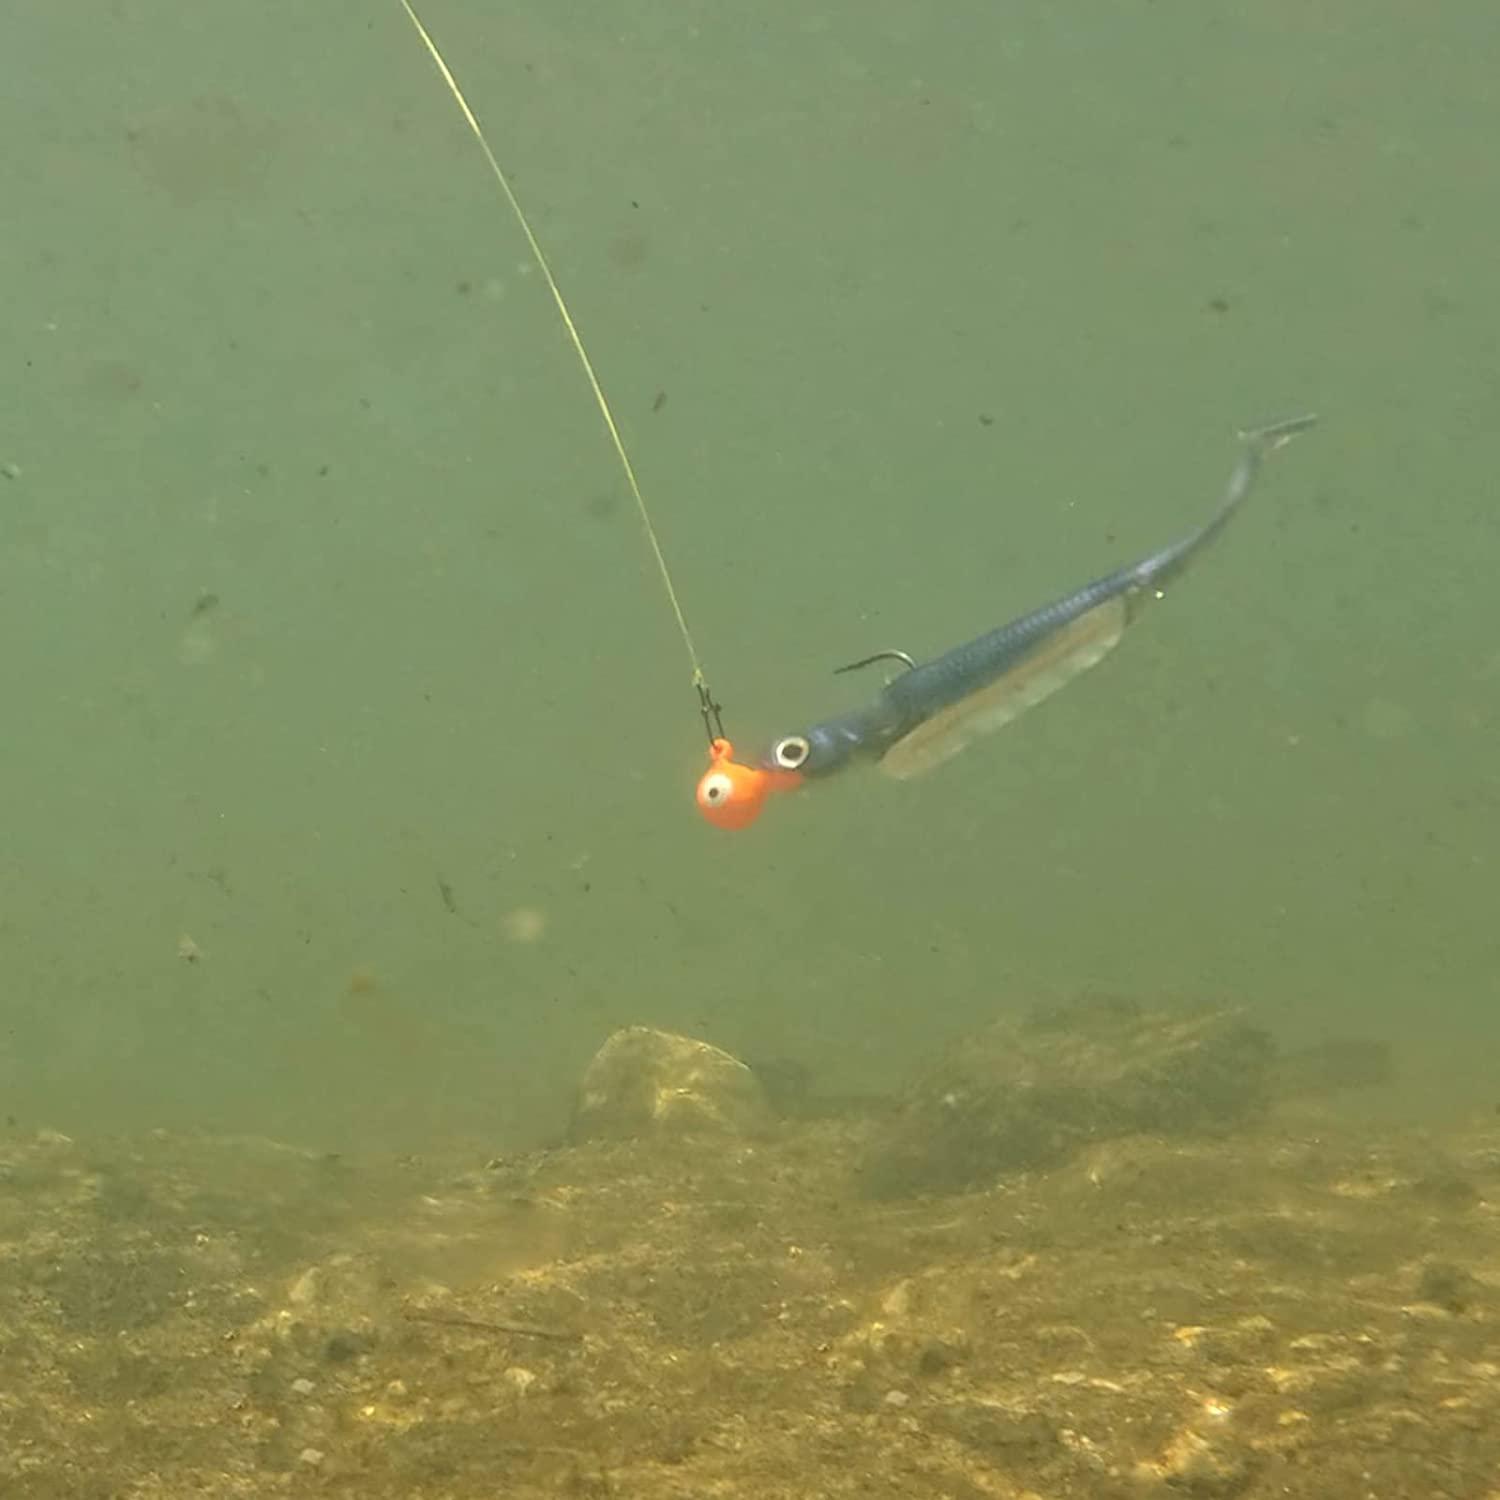 Swim Fluke Bait for Bass Fishing Lure Paddle Tail Soft Plastic